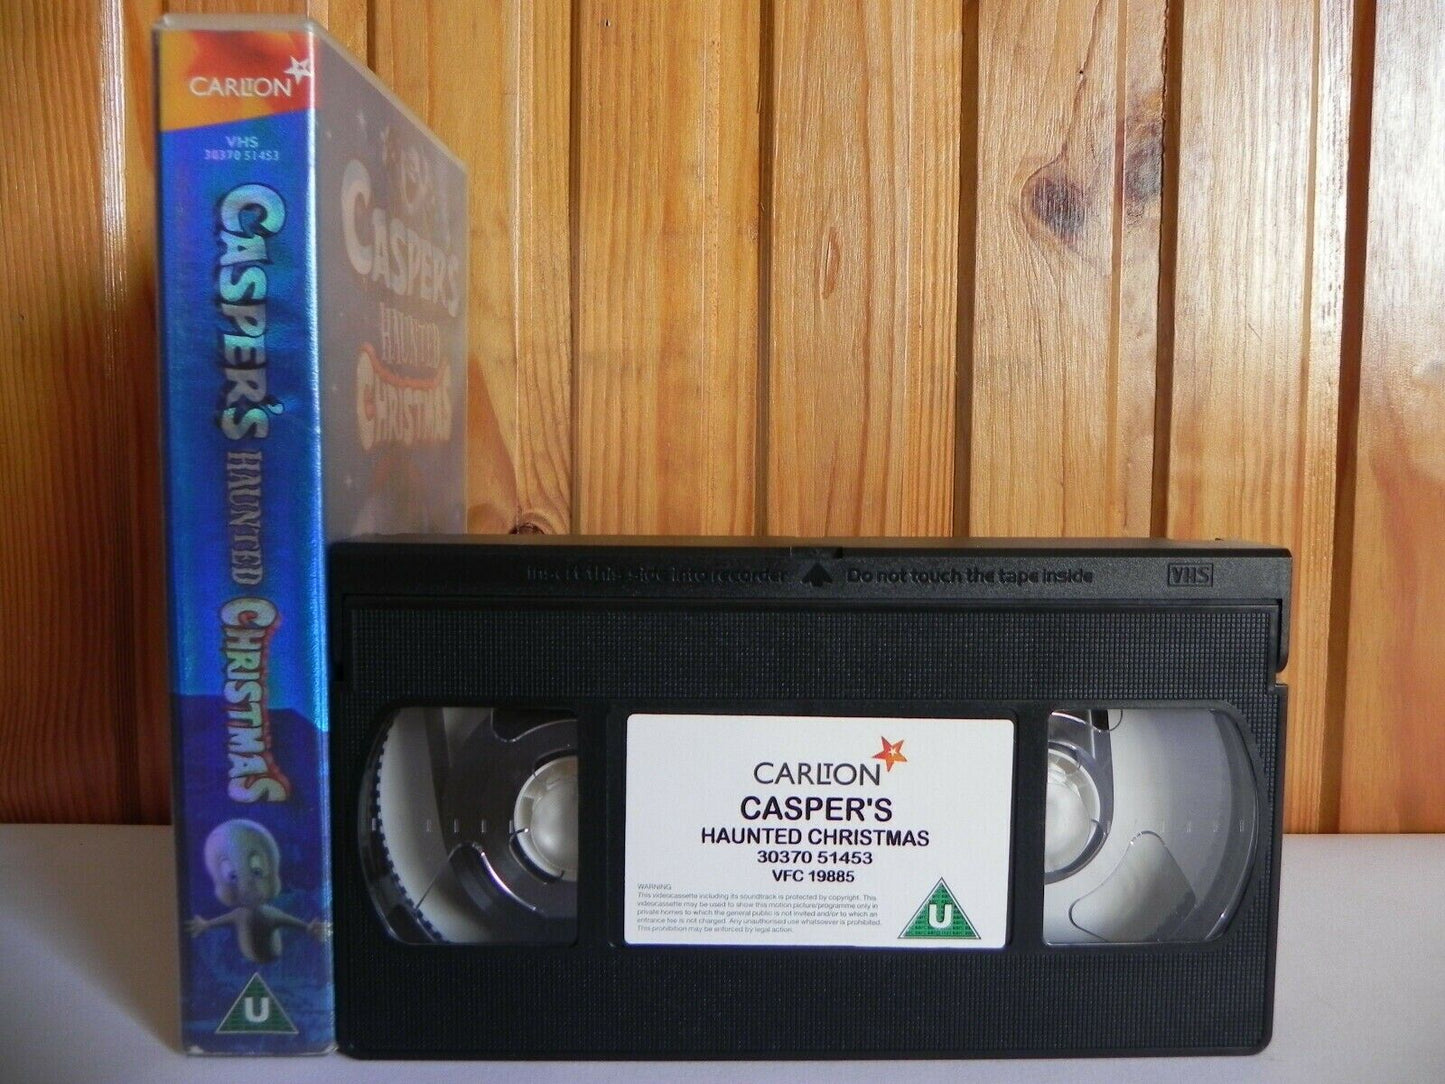 Casper's Haunted Christmas: Festive Special (2000) - Children's Animation - VHS-